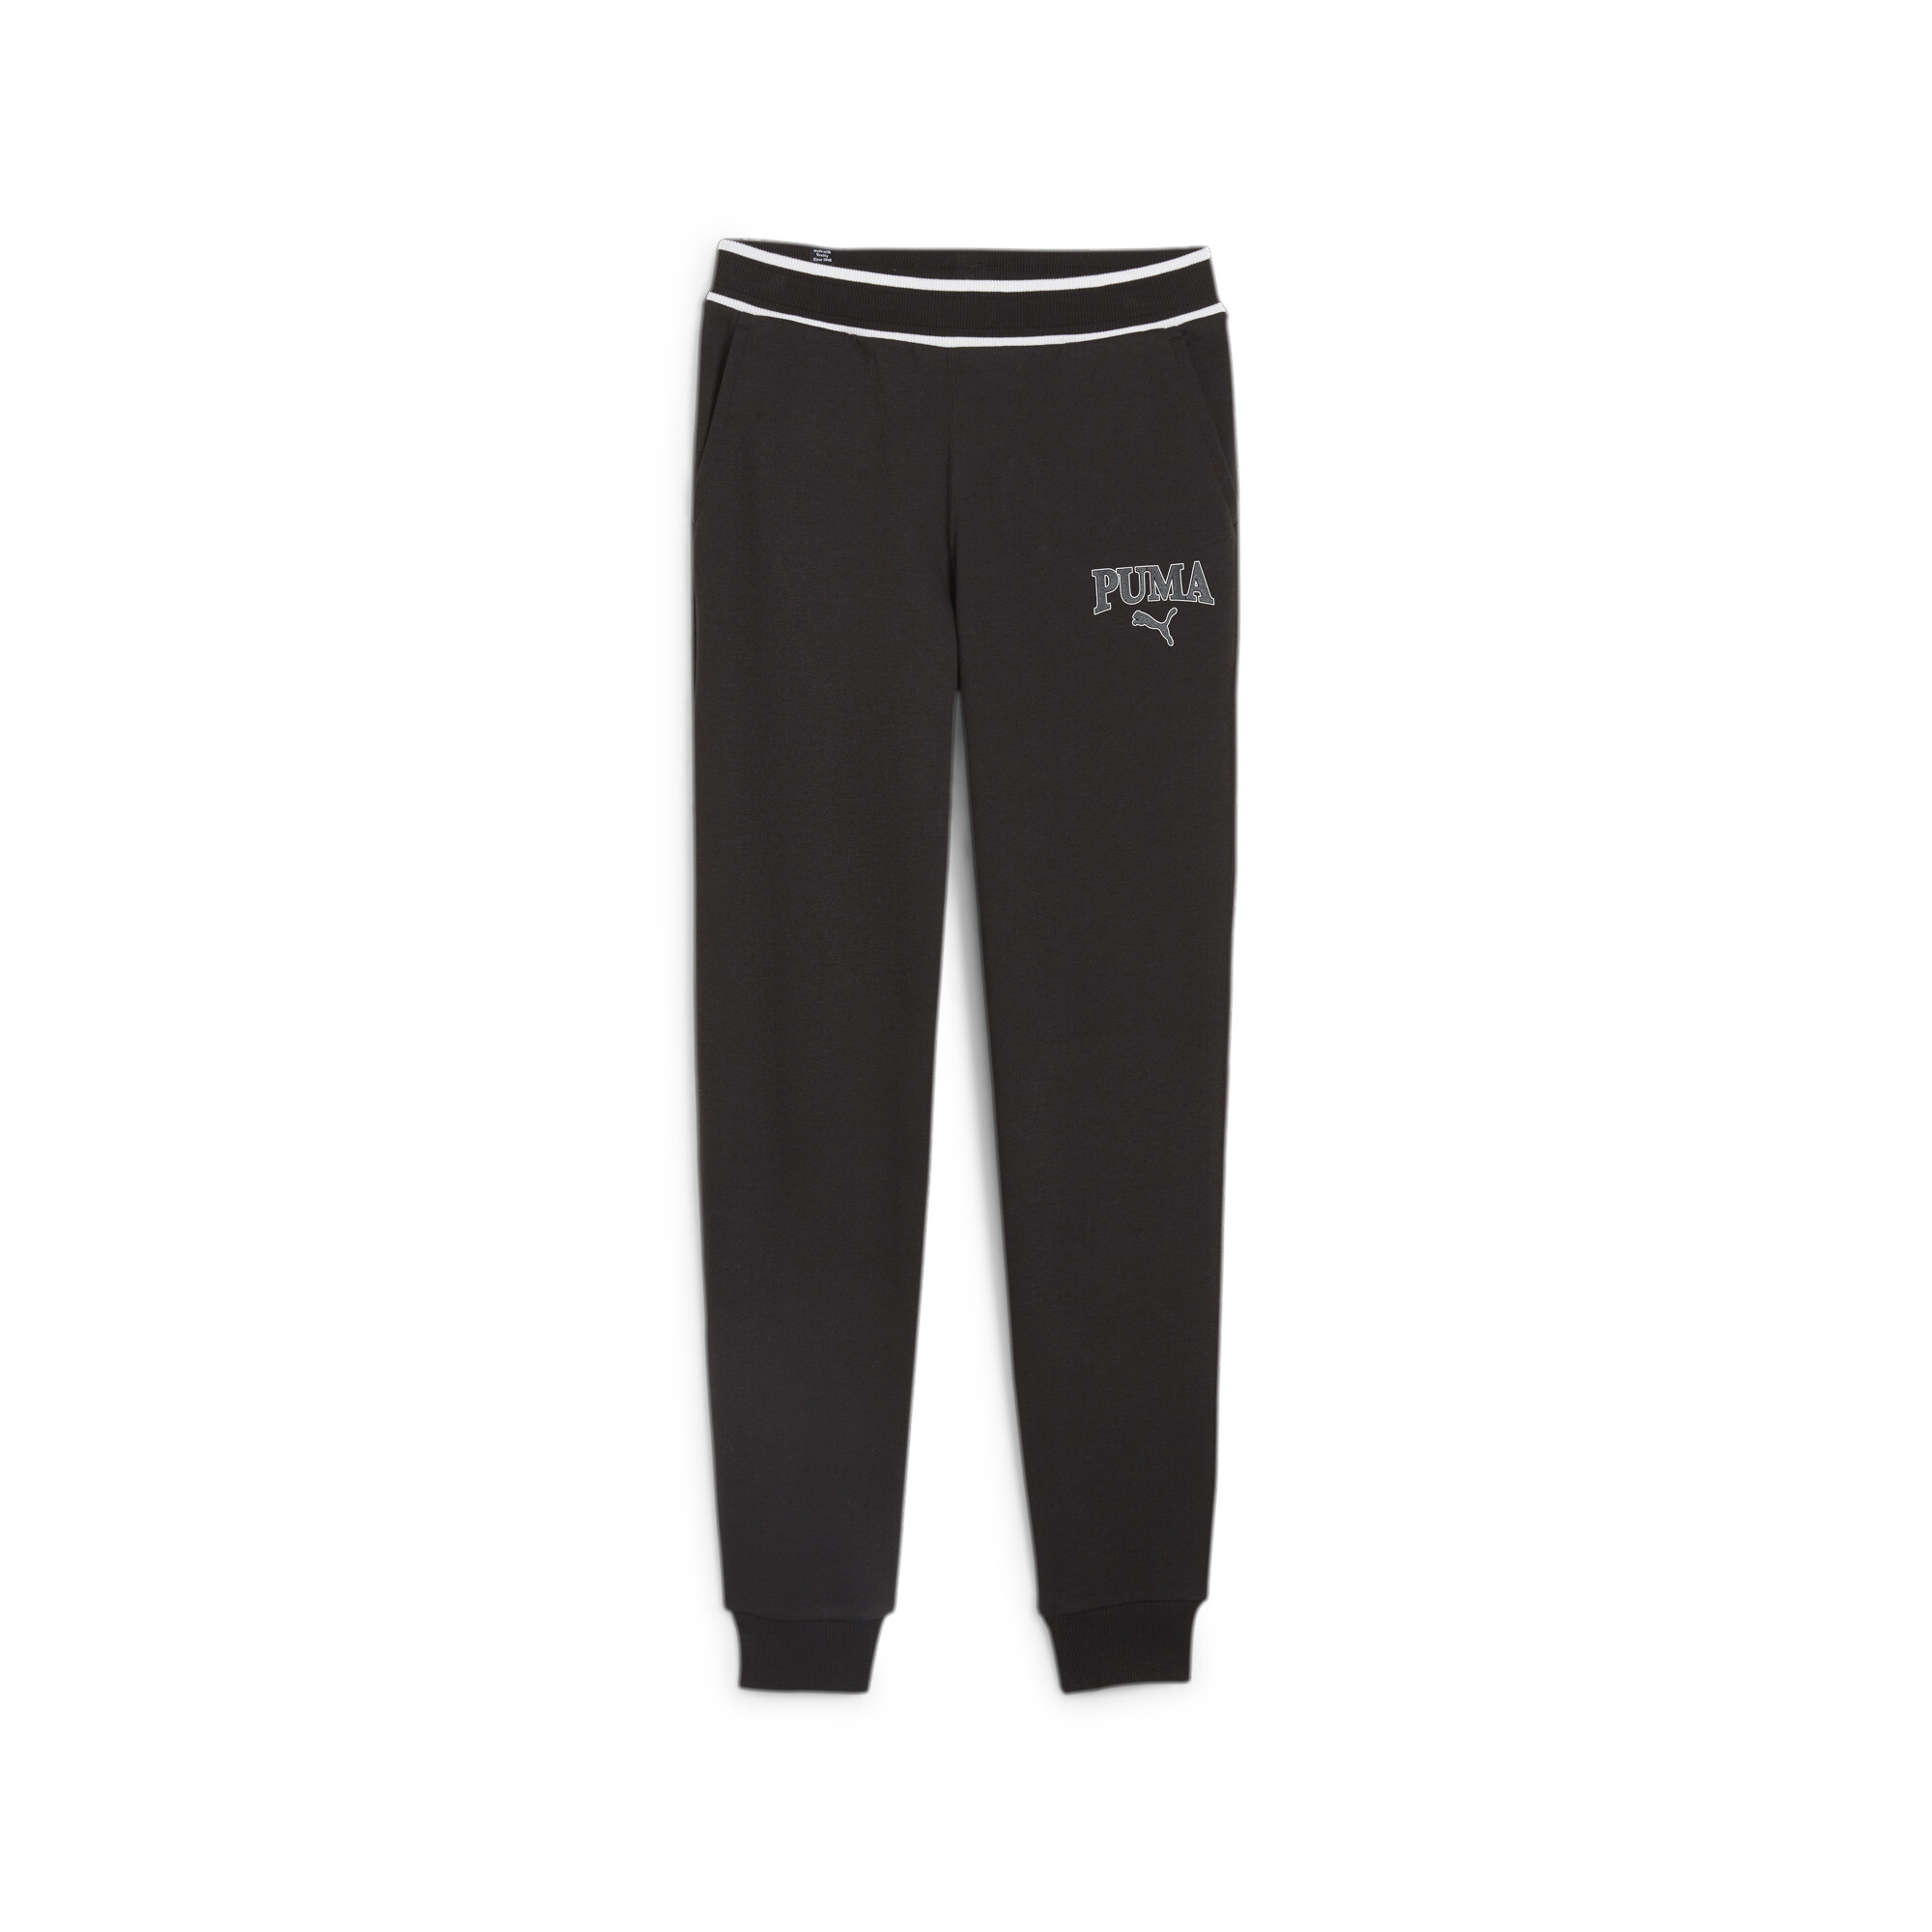 Men's Puma SQUAD Youth Sweatpants, Black, Size 15-16Y, Age